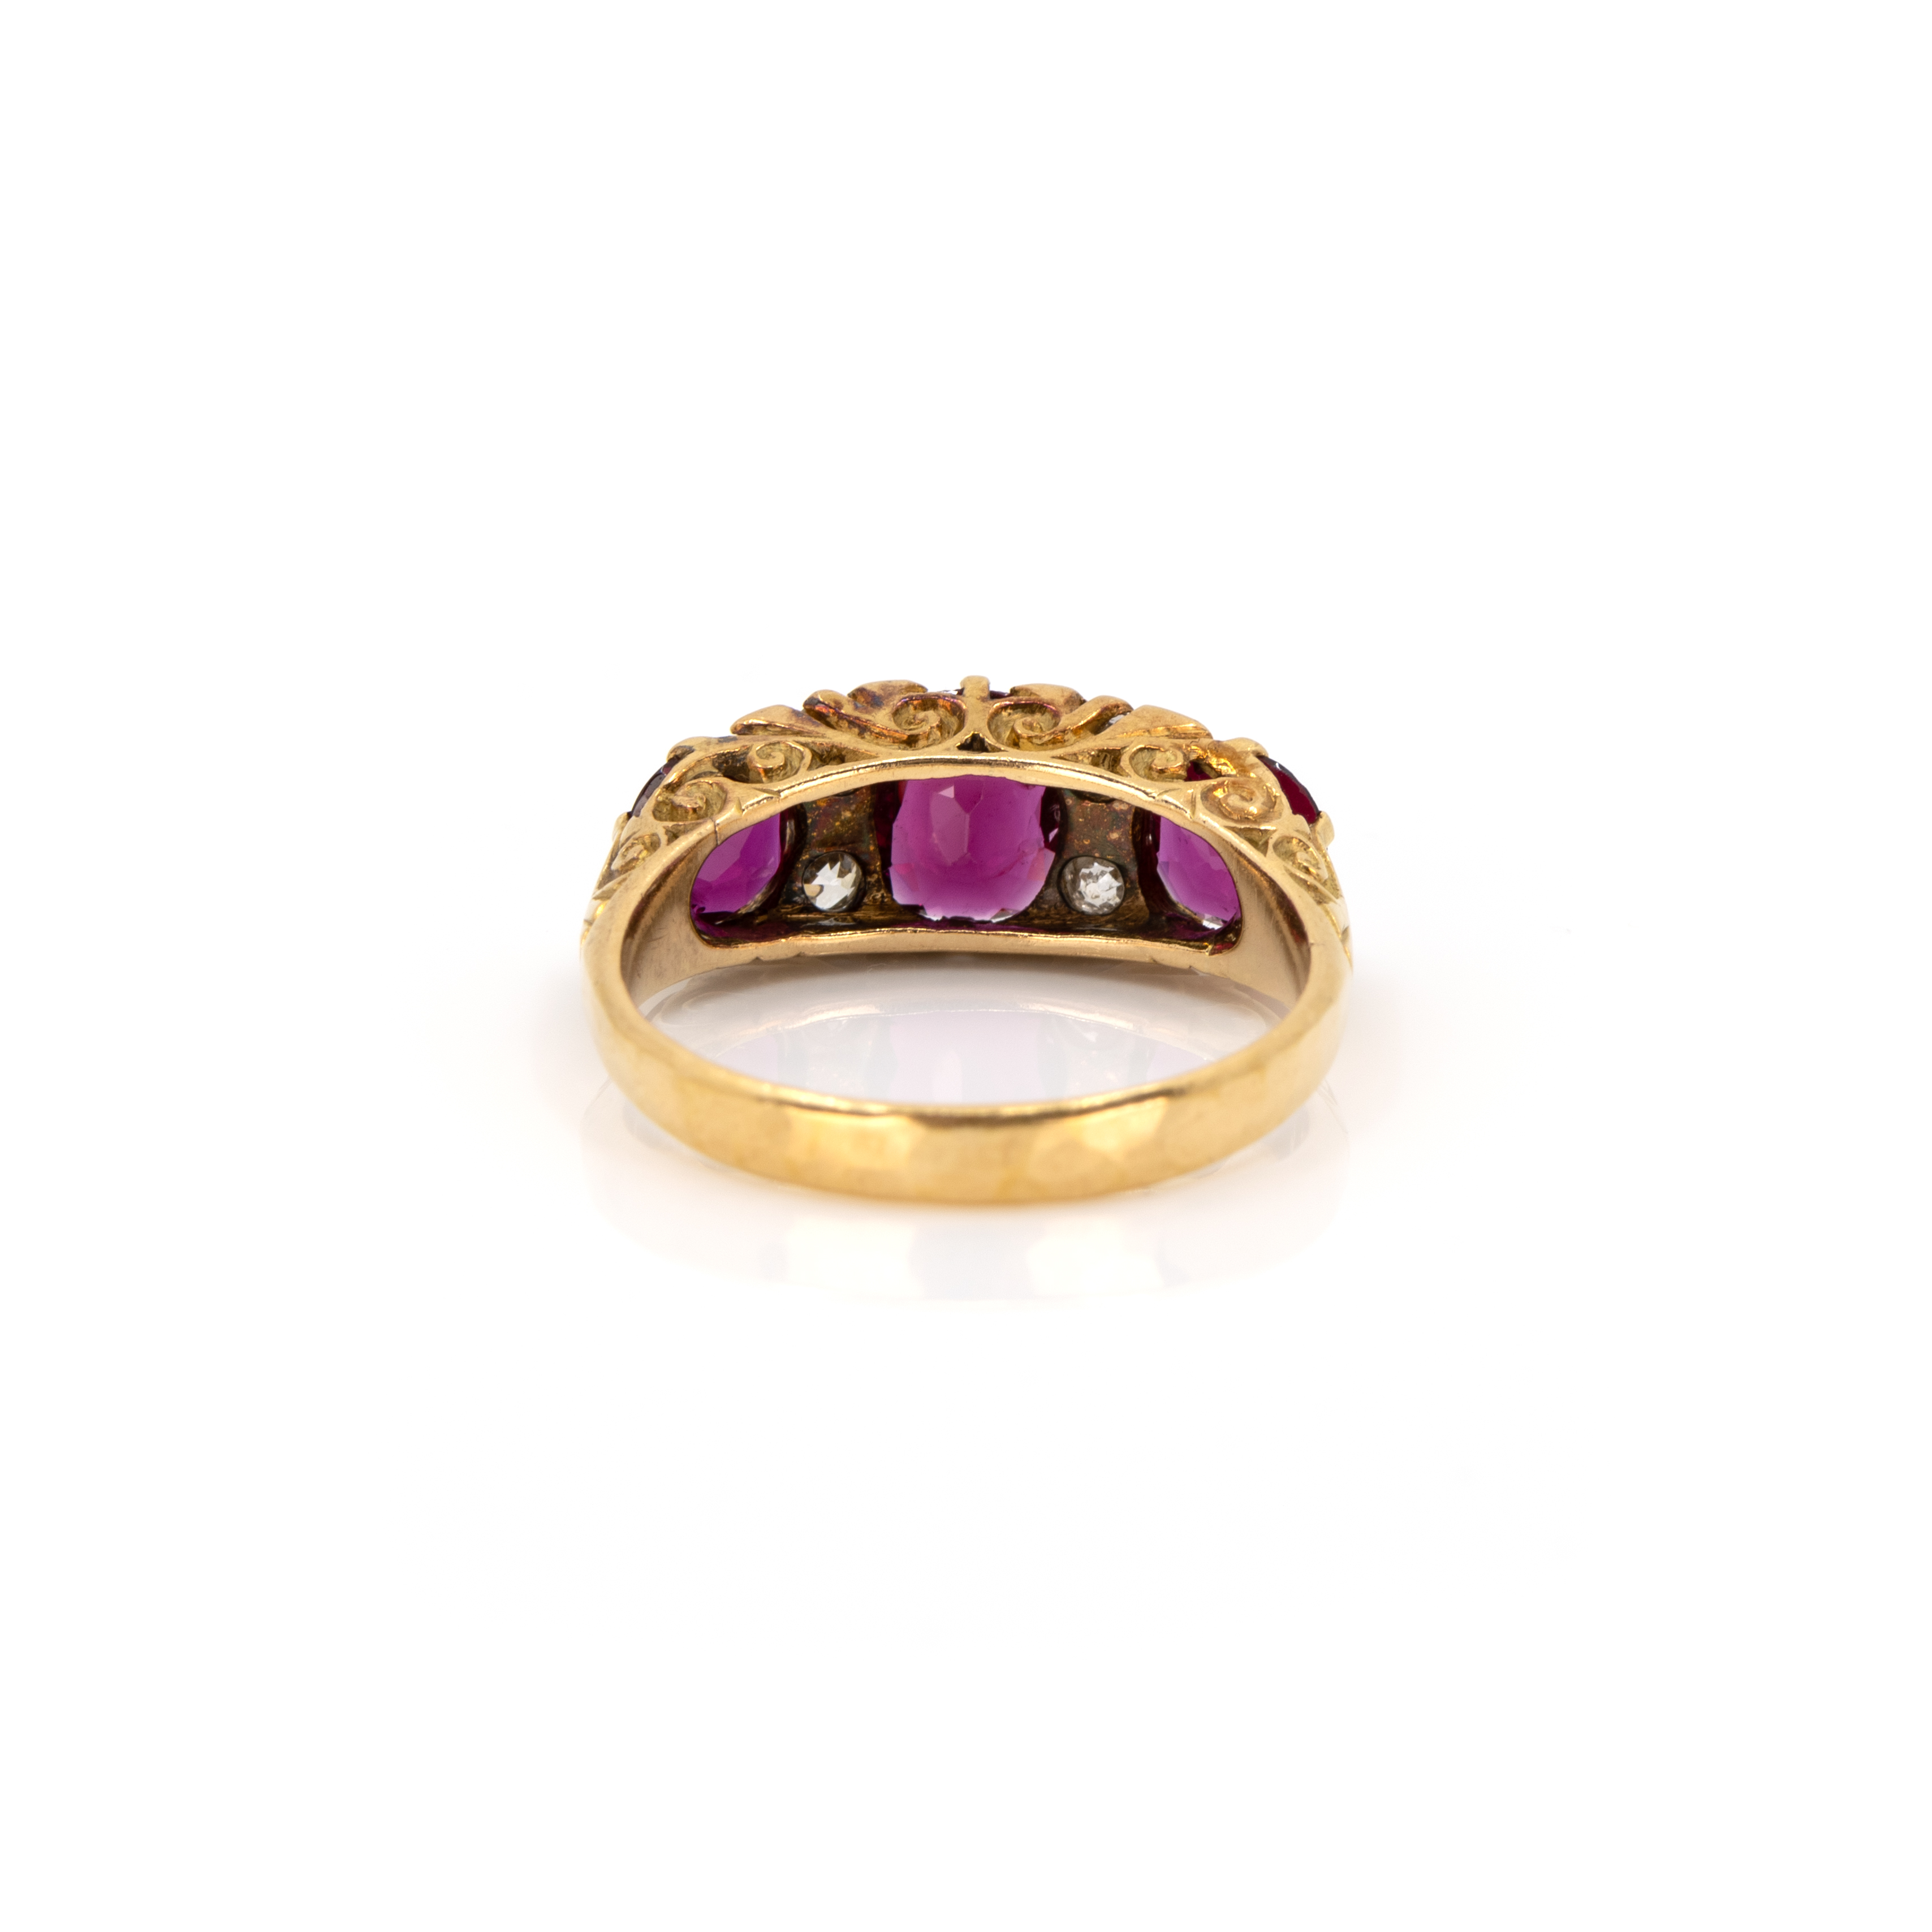 Victorianischer Ring mit Rubin-Diamantbesatz - Image 4 of 5